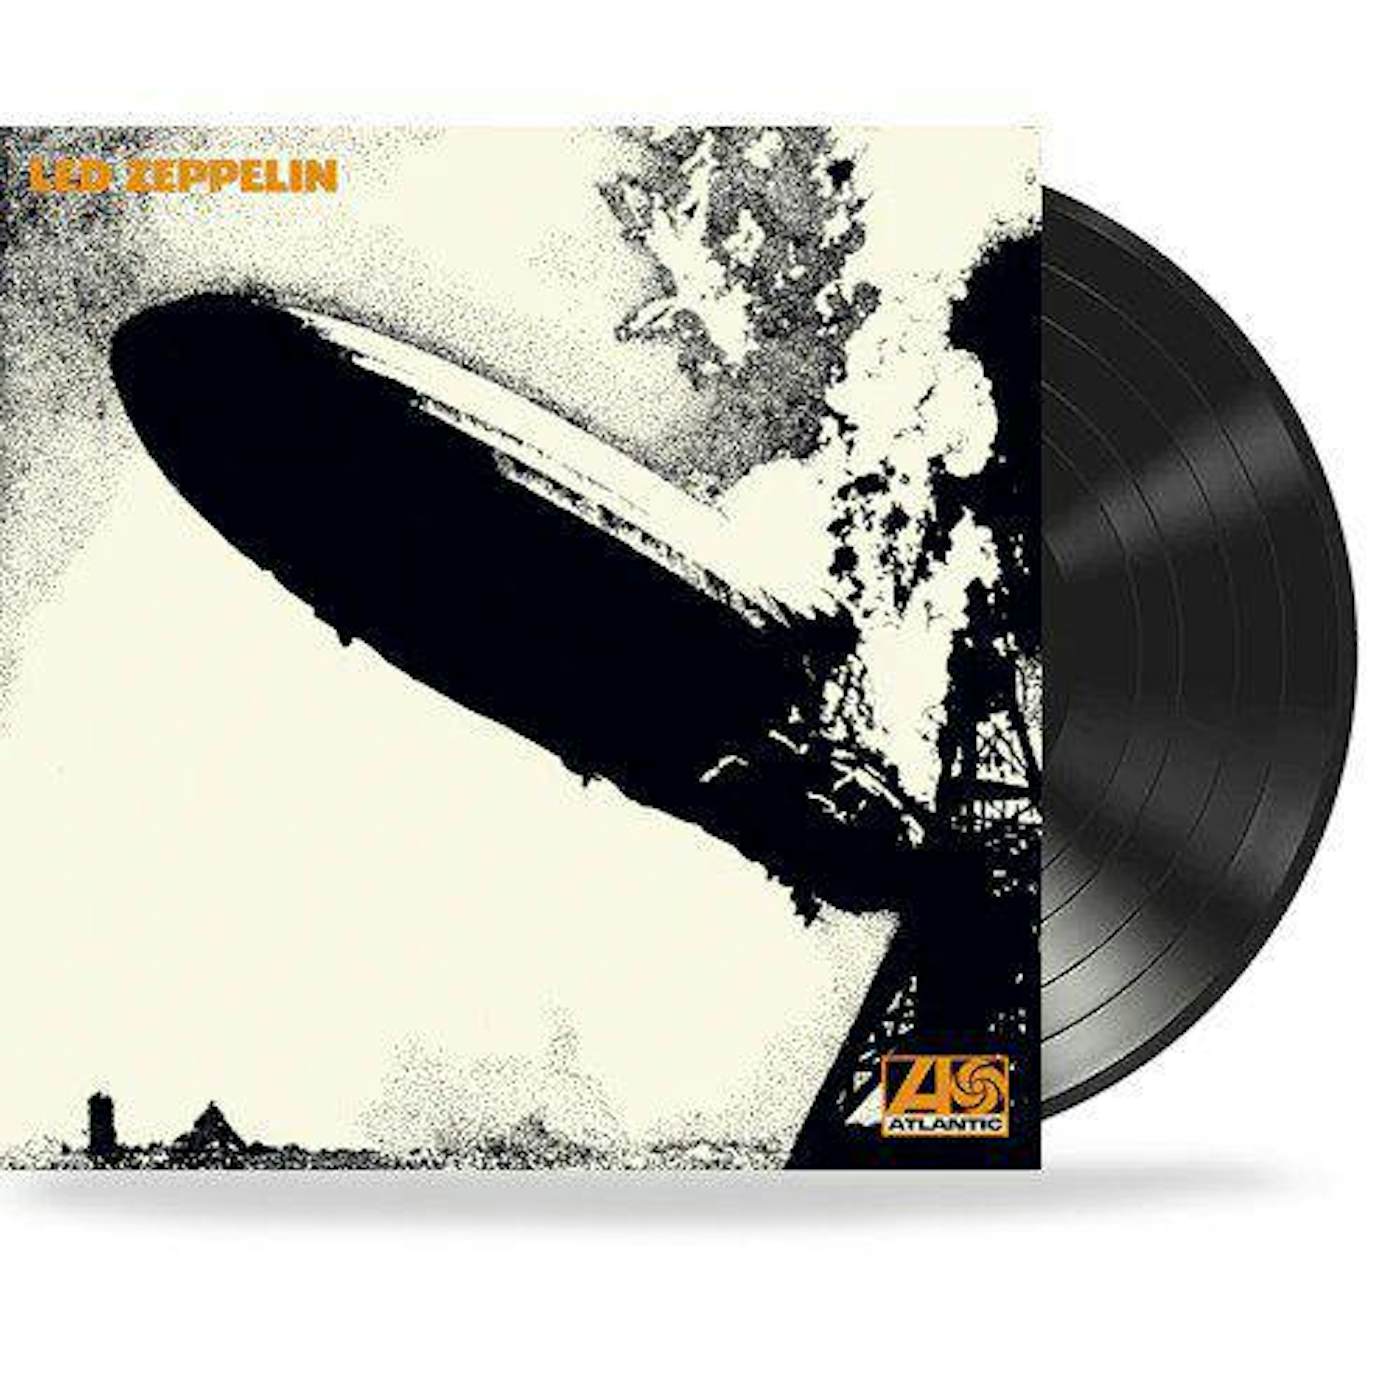  Led Zeppelin I (Remastered Original Album) Vinyl Record